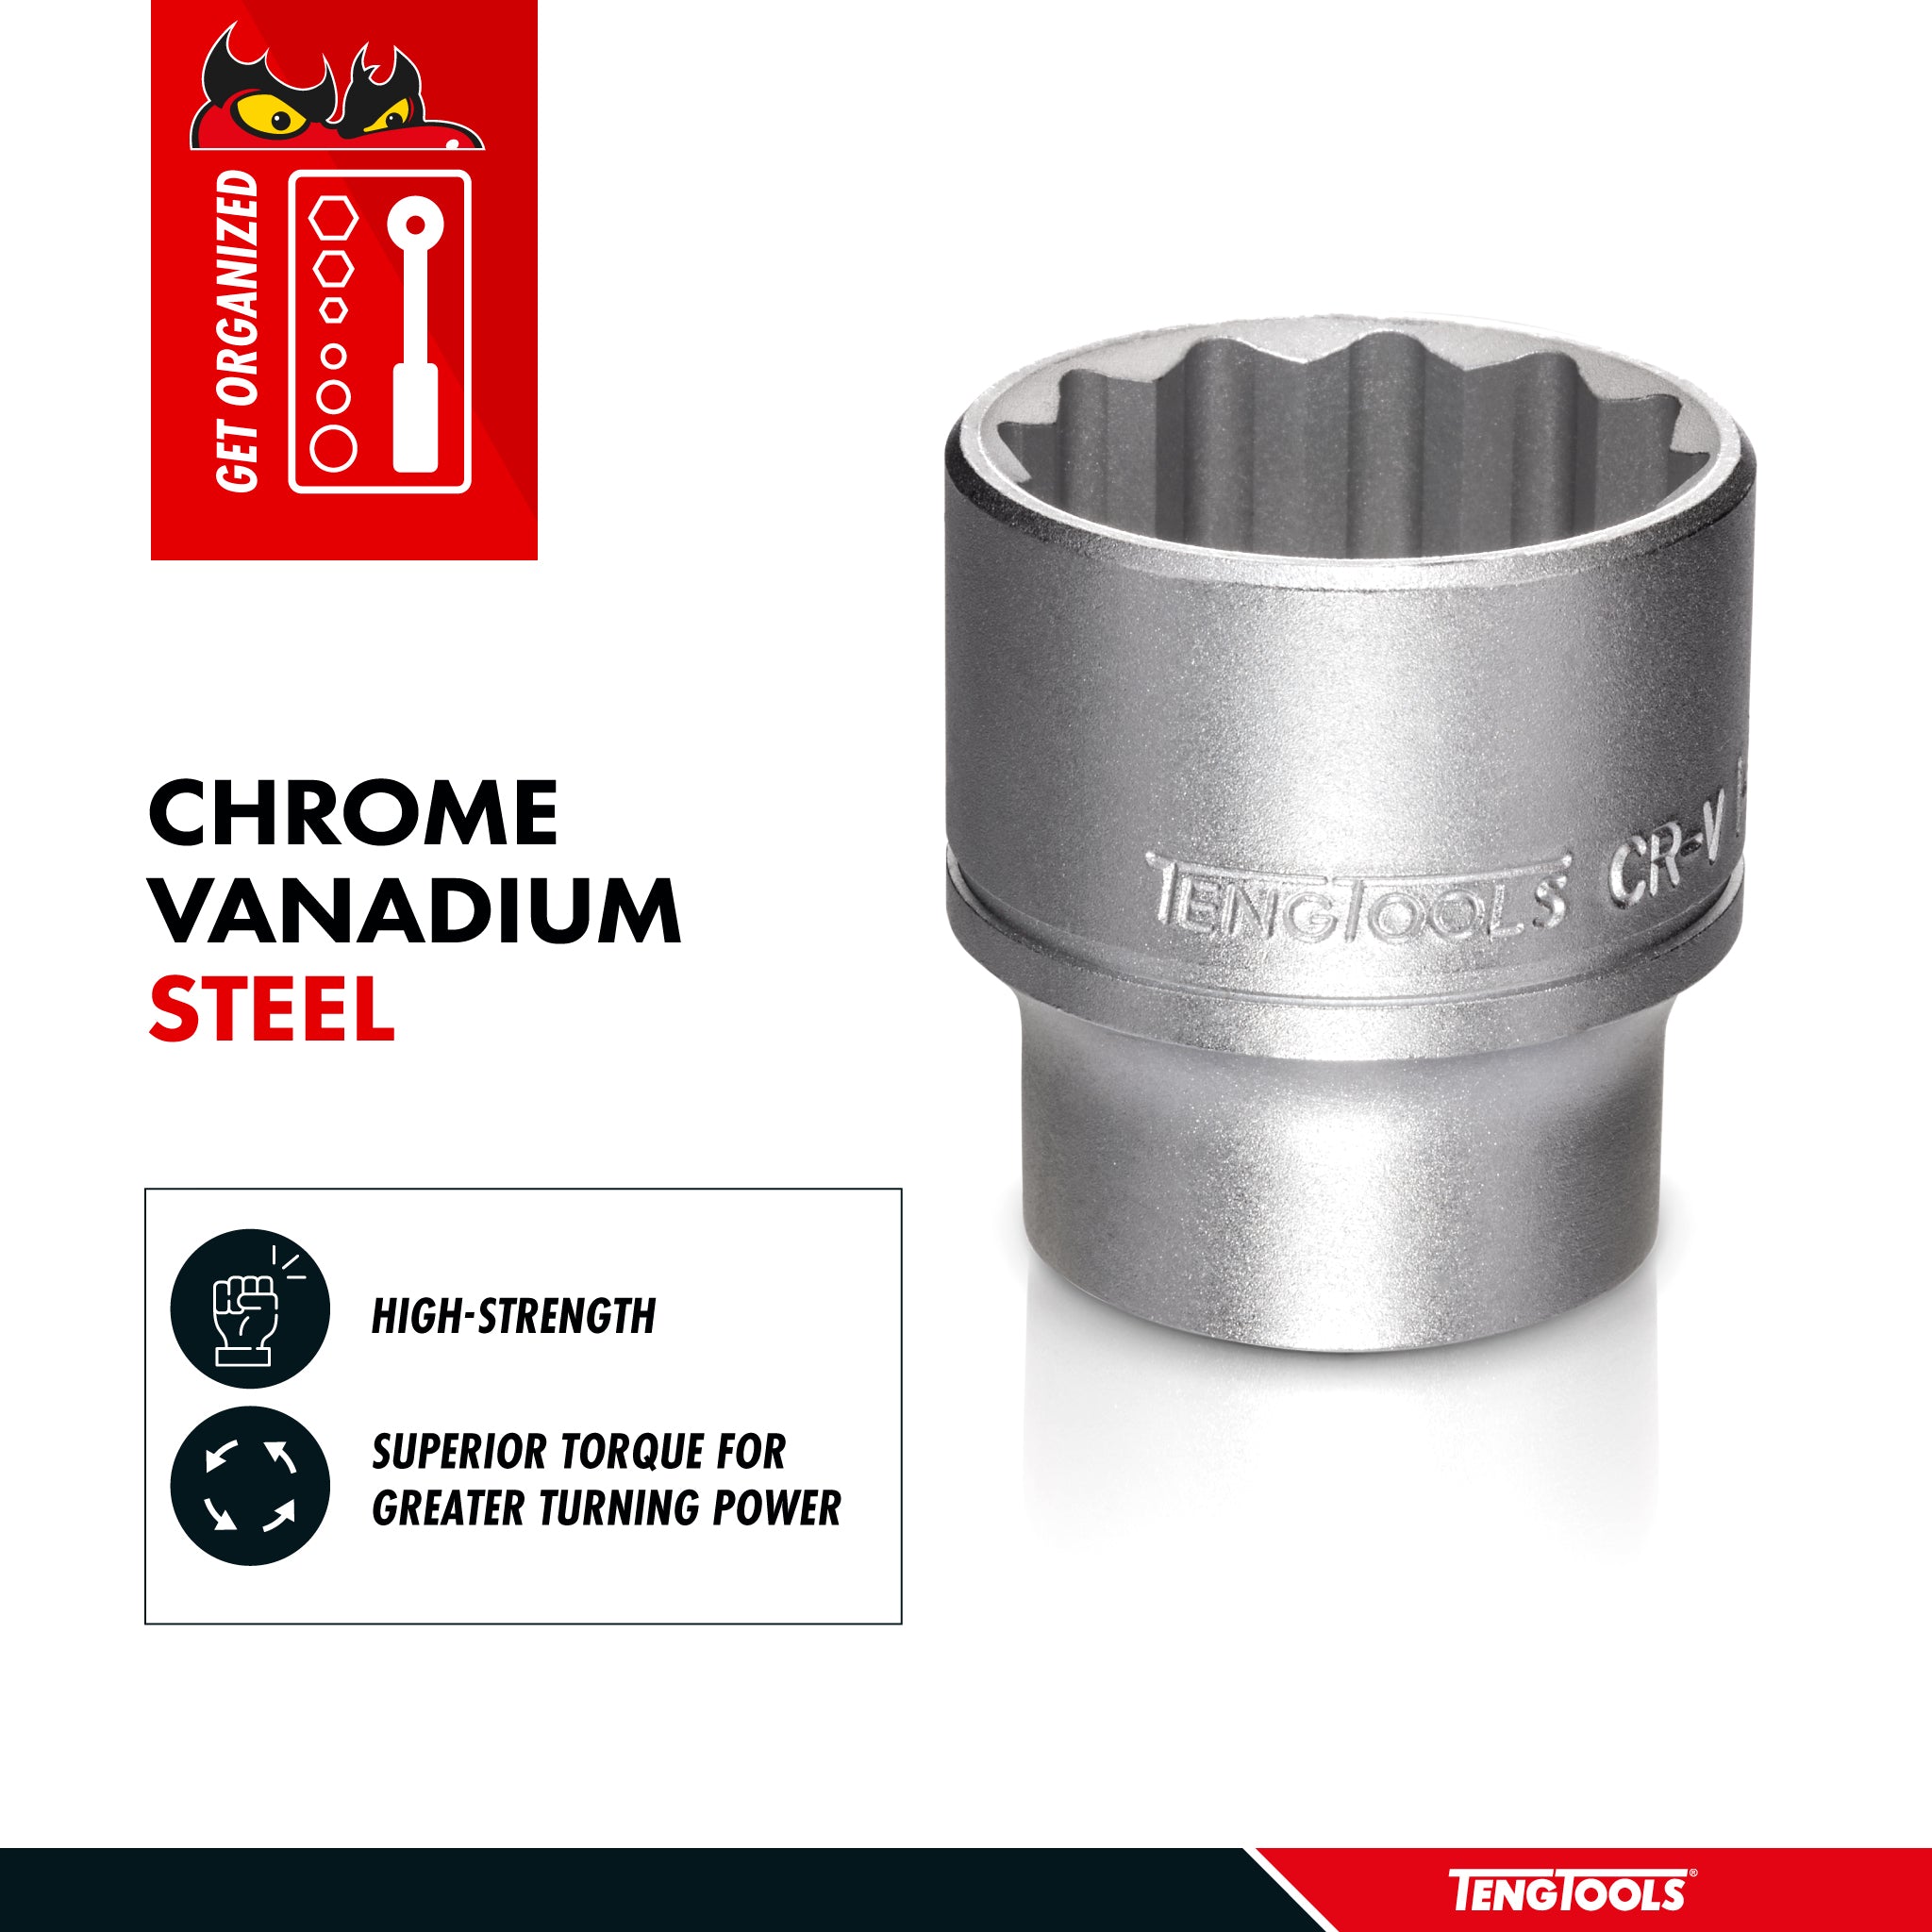 Teng Tools 1/2 Inch Drive 12 Point SAE Shallow Chrome Vanadium Sockets - 1-1/4